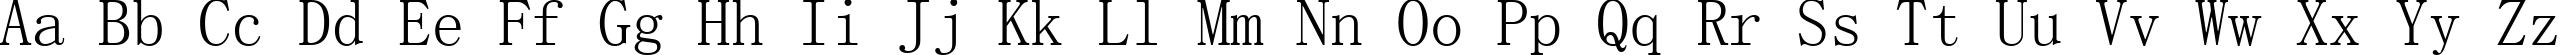 Пример написания английского алфавита шрифтом SimSun